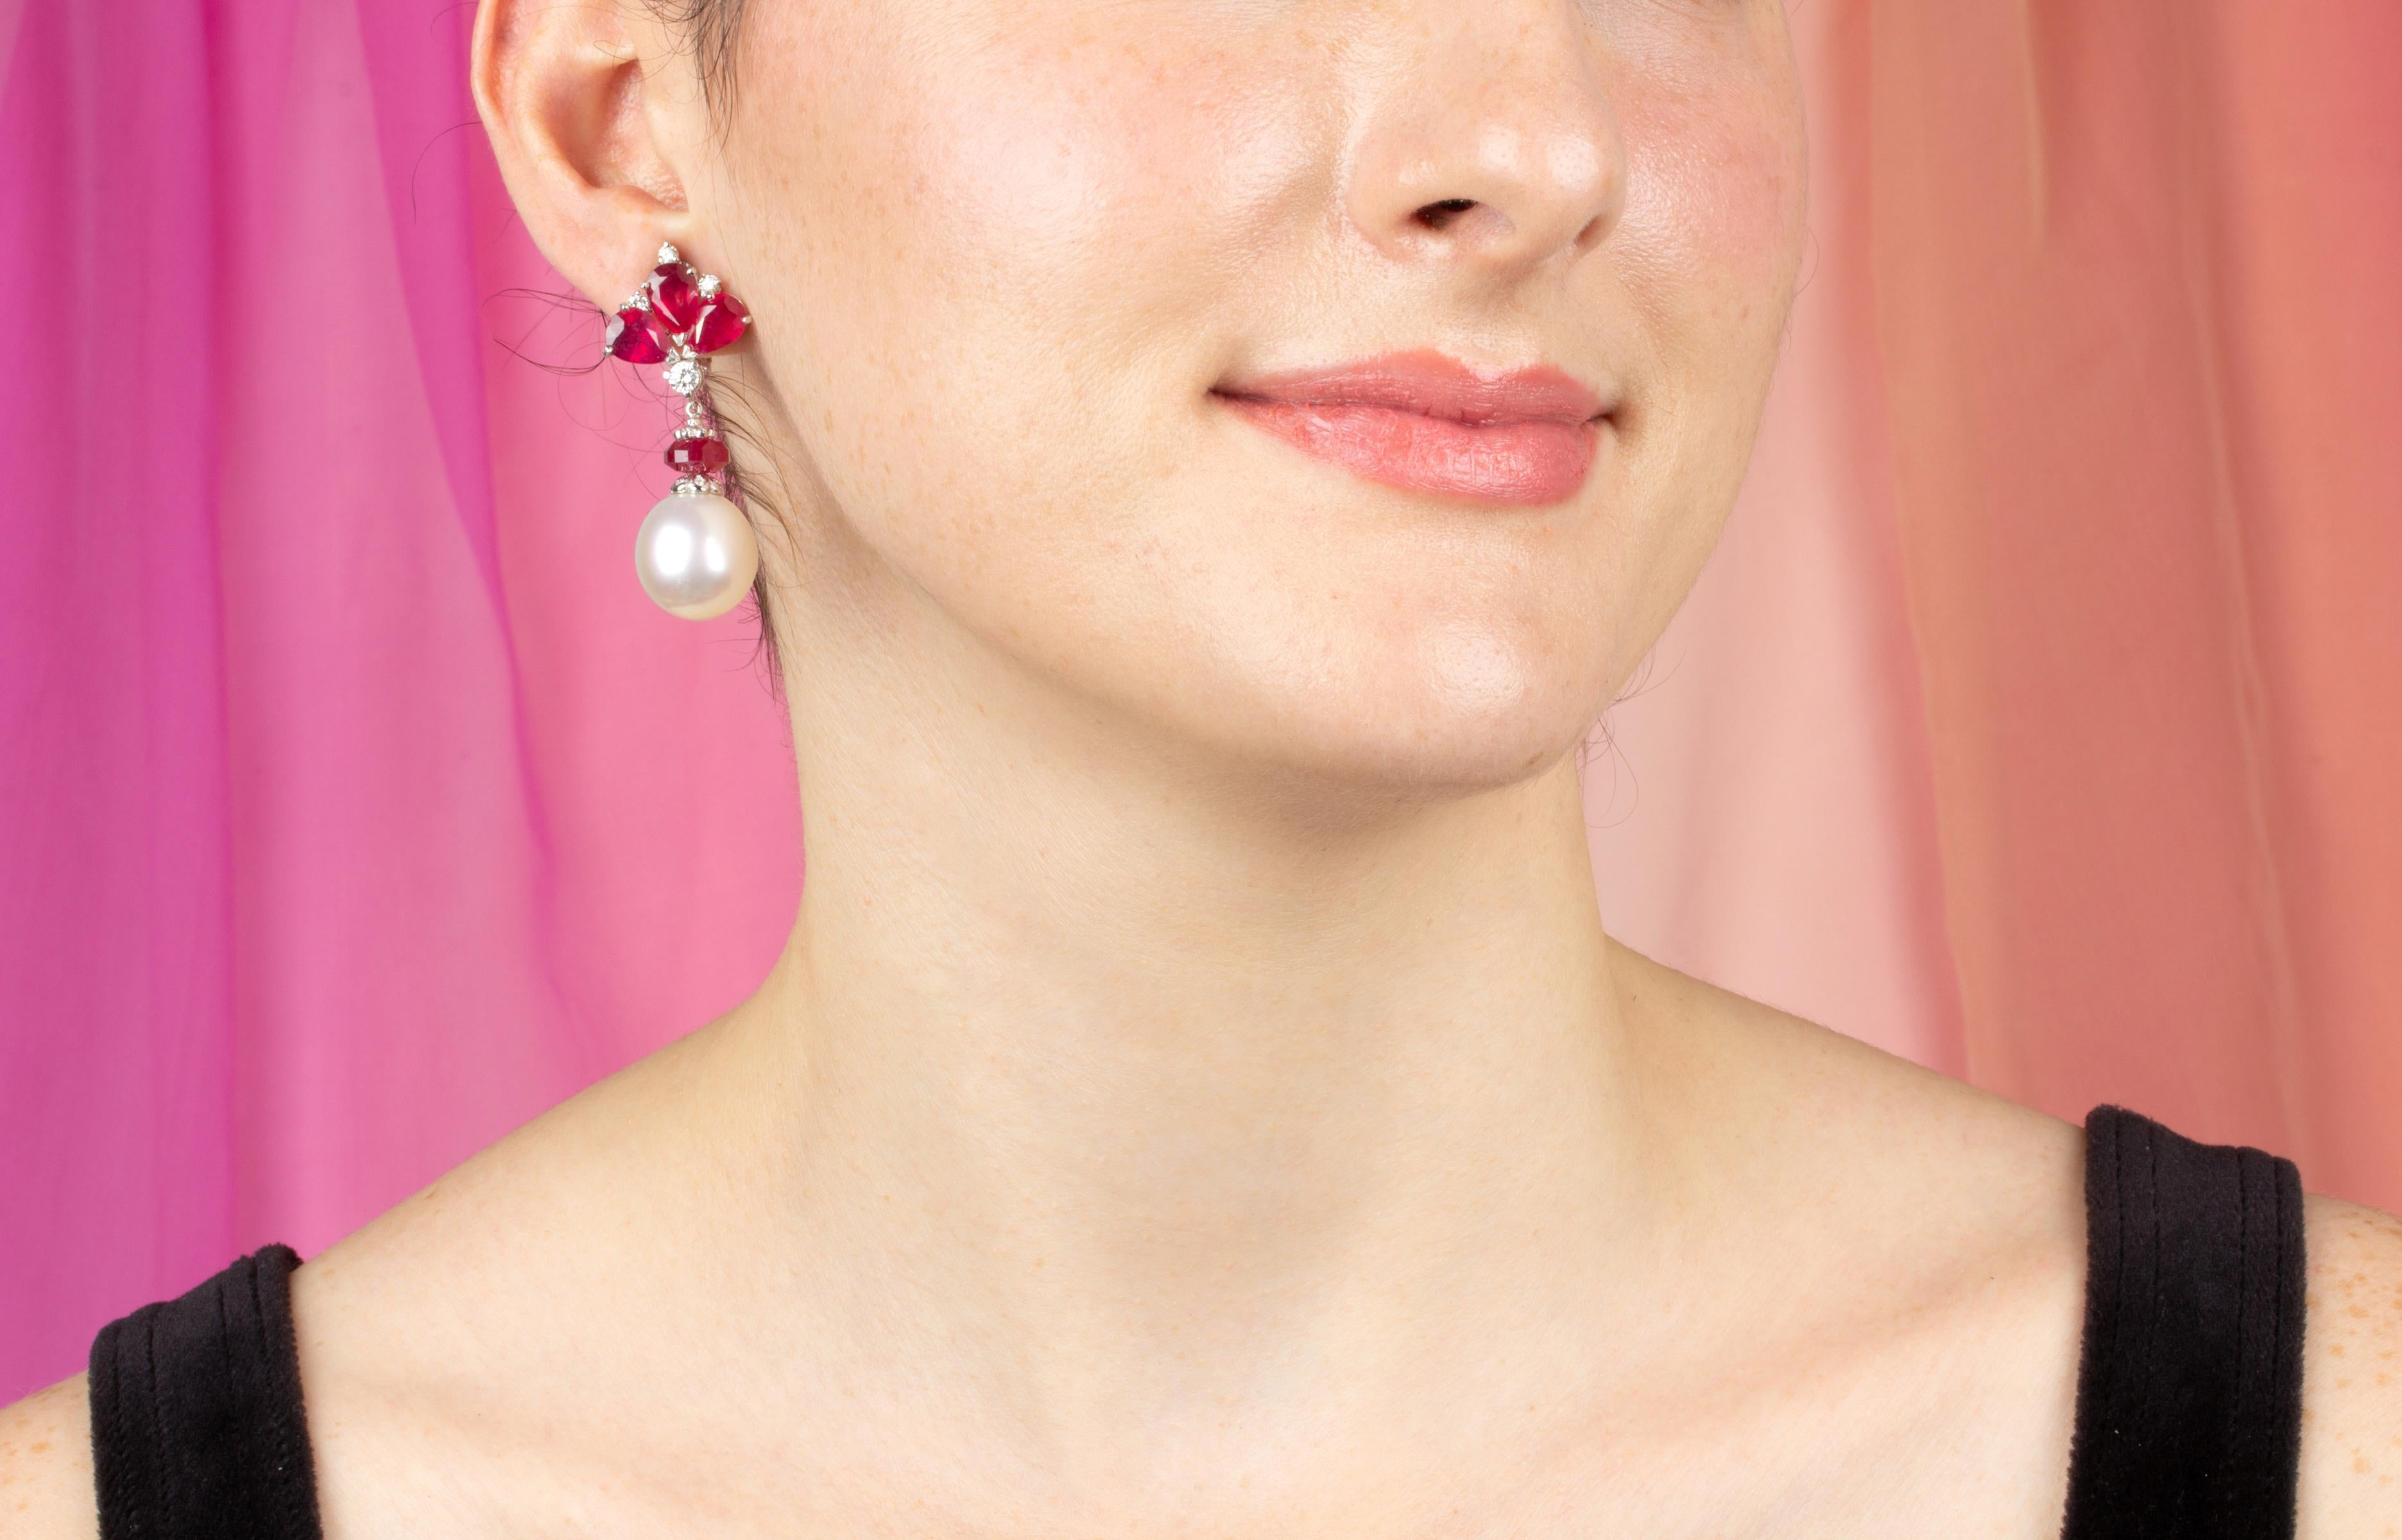 ruby and pearl earrings